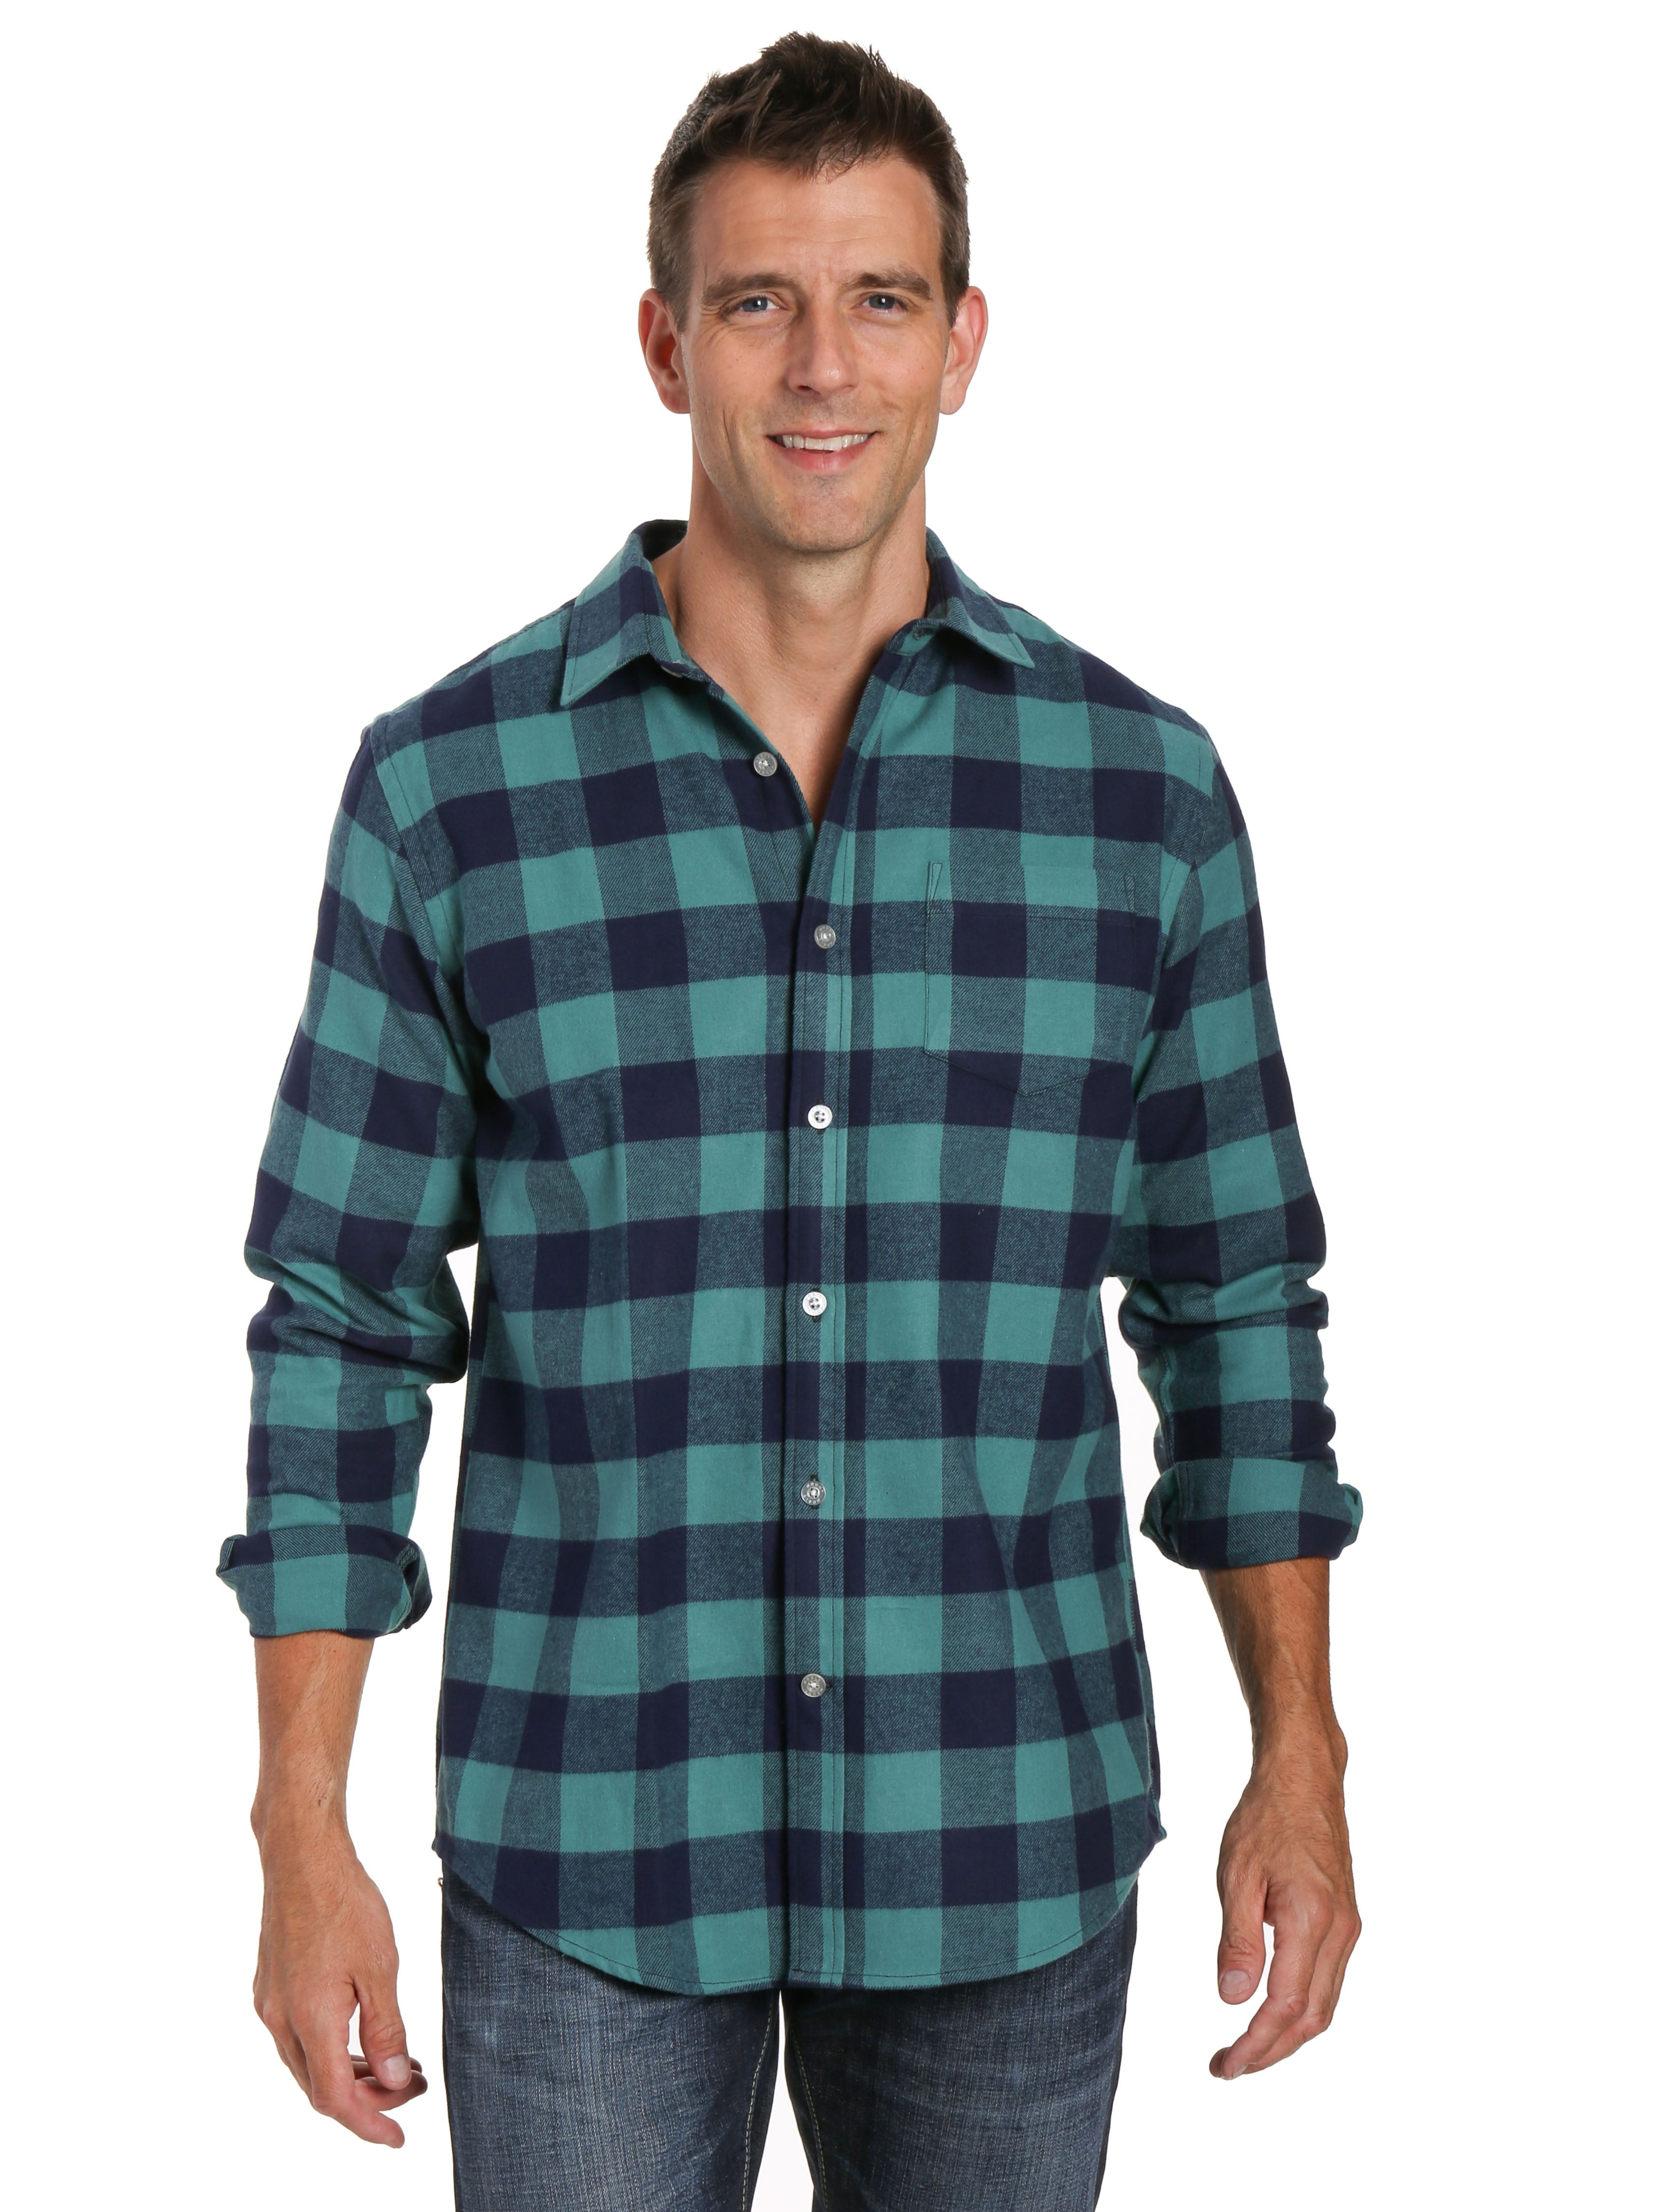 Mens 100% Cotton Flannel Shirt - Regular Fit - Gingham Checks - Blue-Green